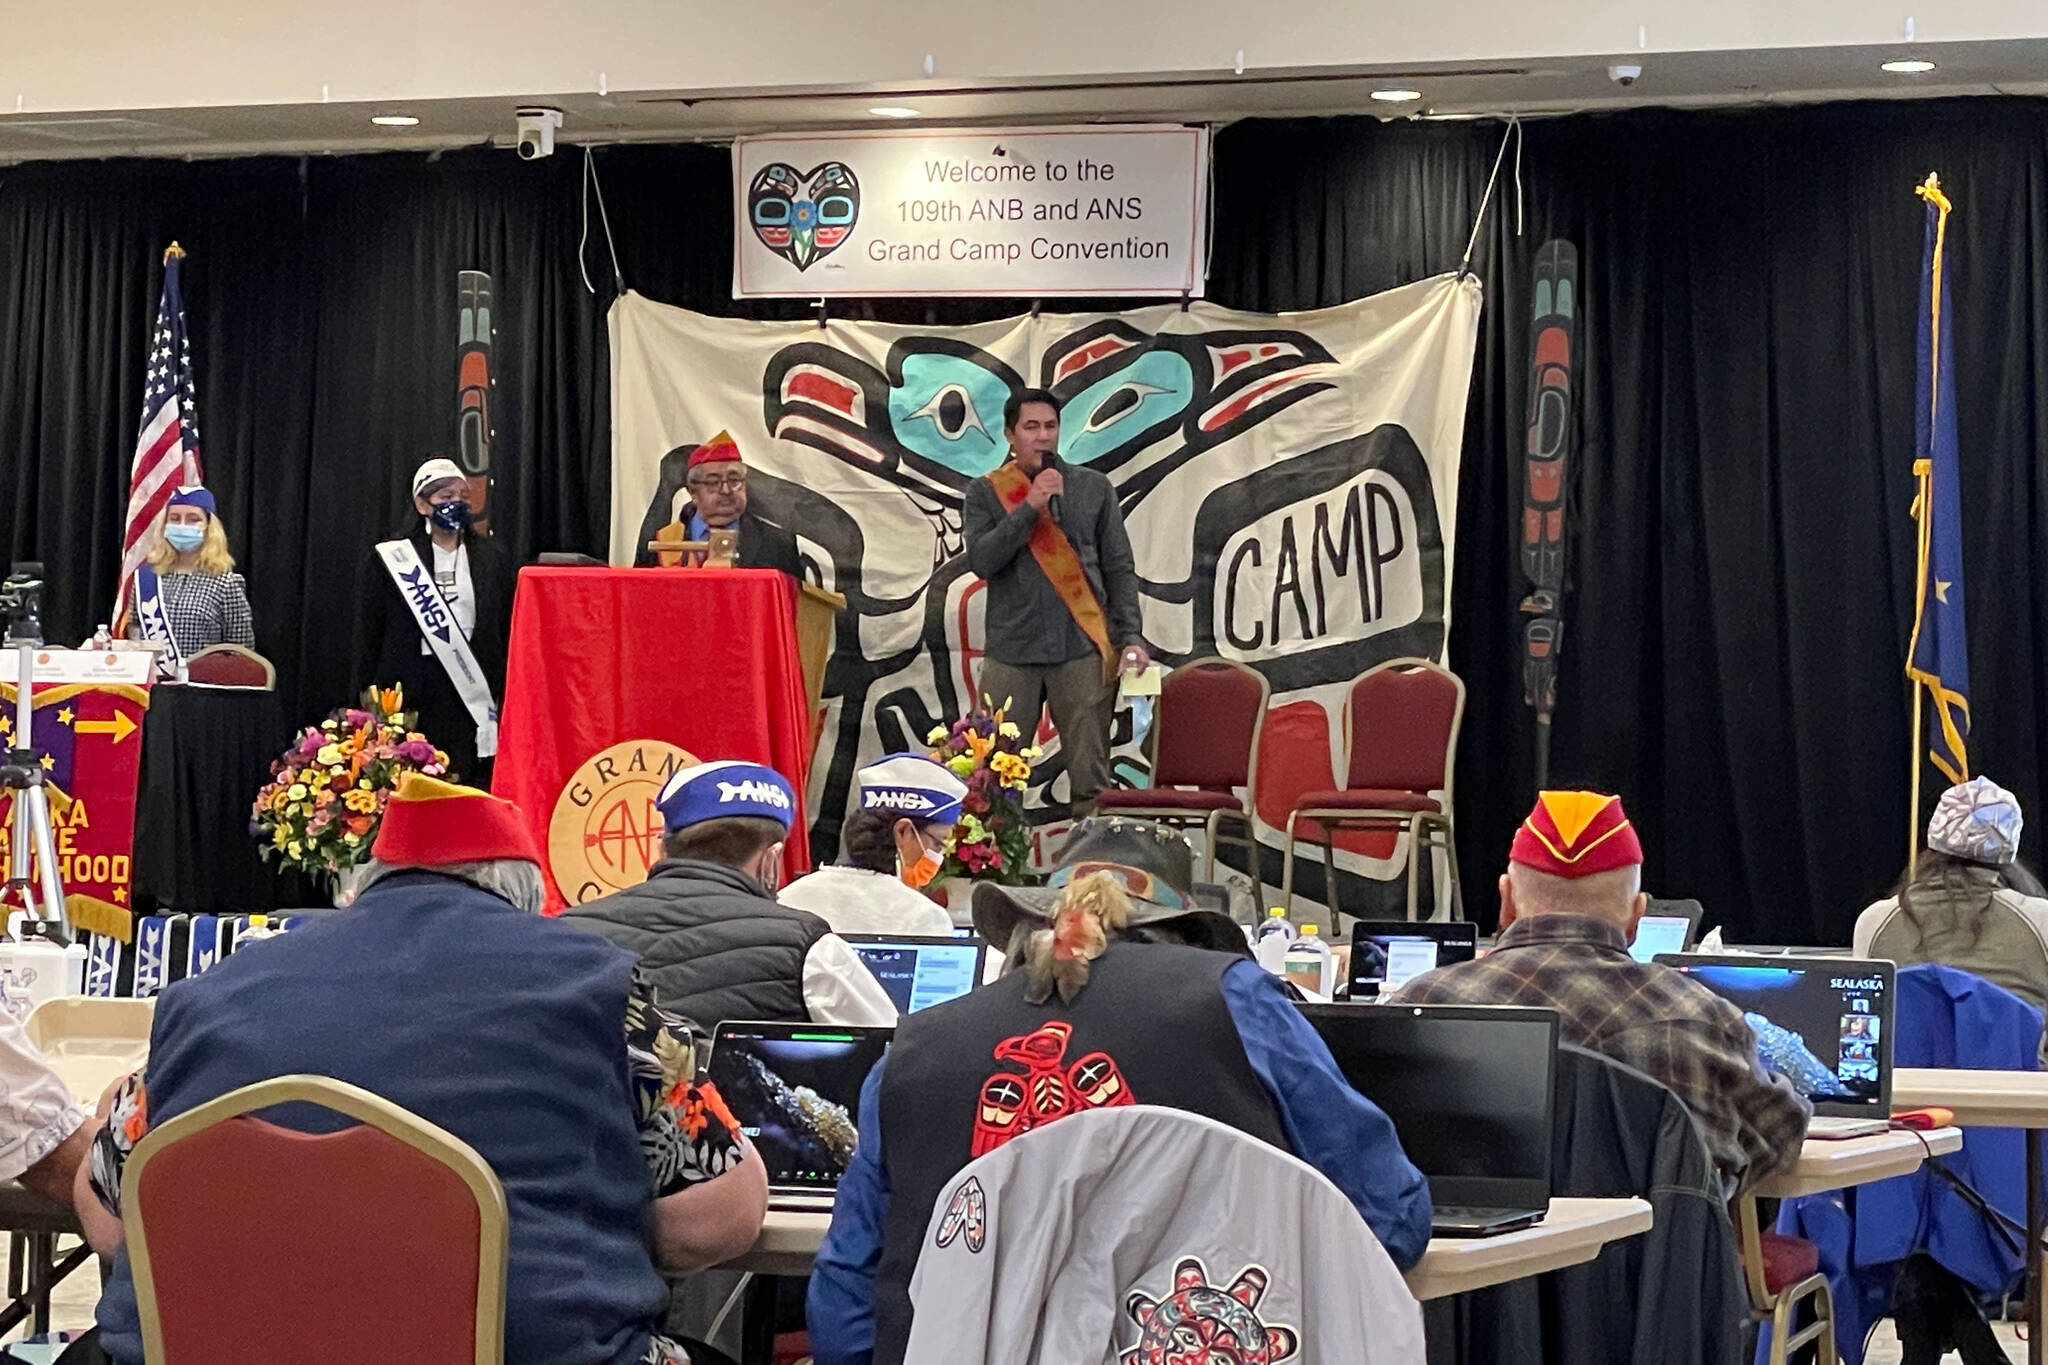 Michael S. Lockett / Juneau Empire 
Speakers address participants in the Alaska Native Brotherhood/Alaska Native Sisterhood’s 109th Grand Camp Convention at Elizabeth Peratrovich Hall on Oct. 8, 2021.